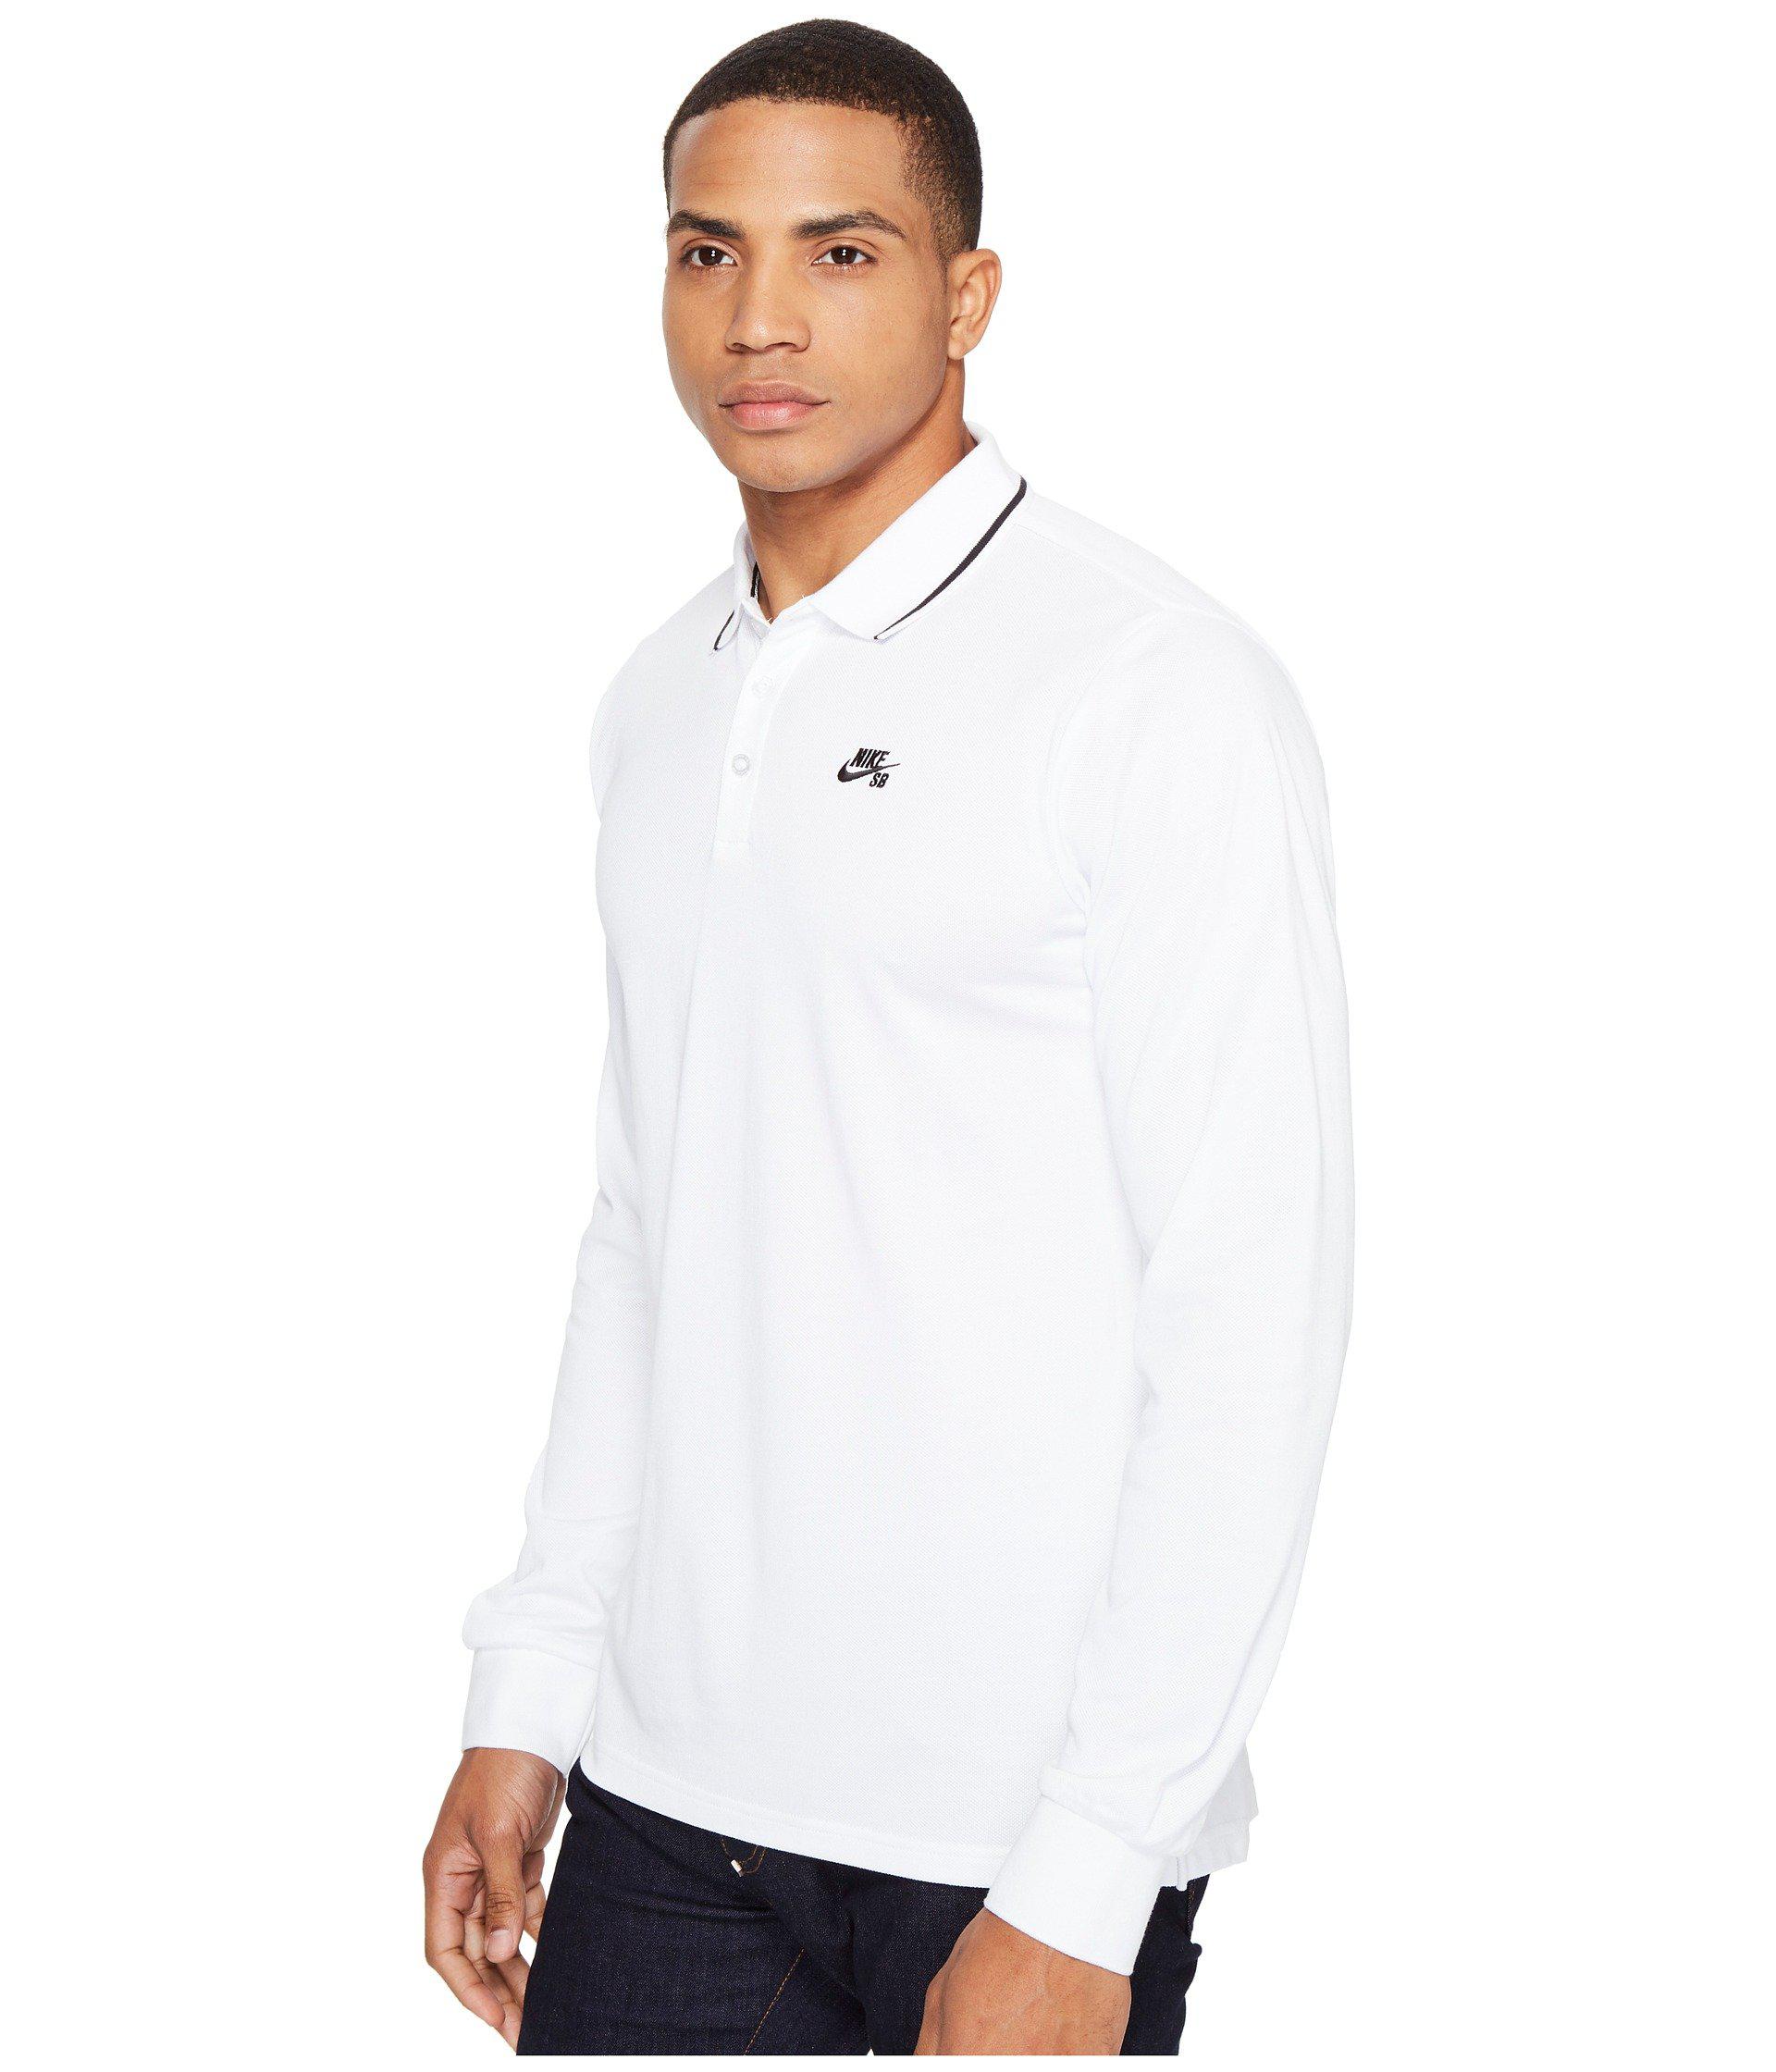 Nike Cotton Sb Dri-fit Piqué Long Sleeve Polo in White/Black (White) for  Men - Lyst